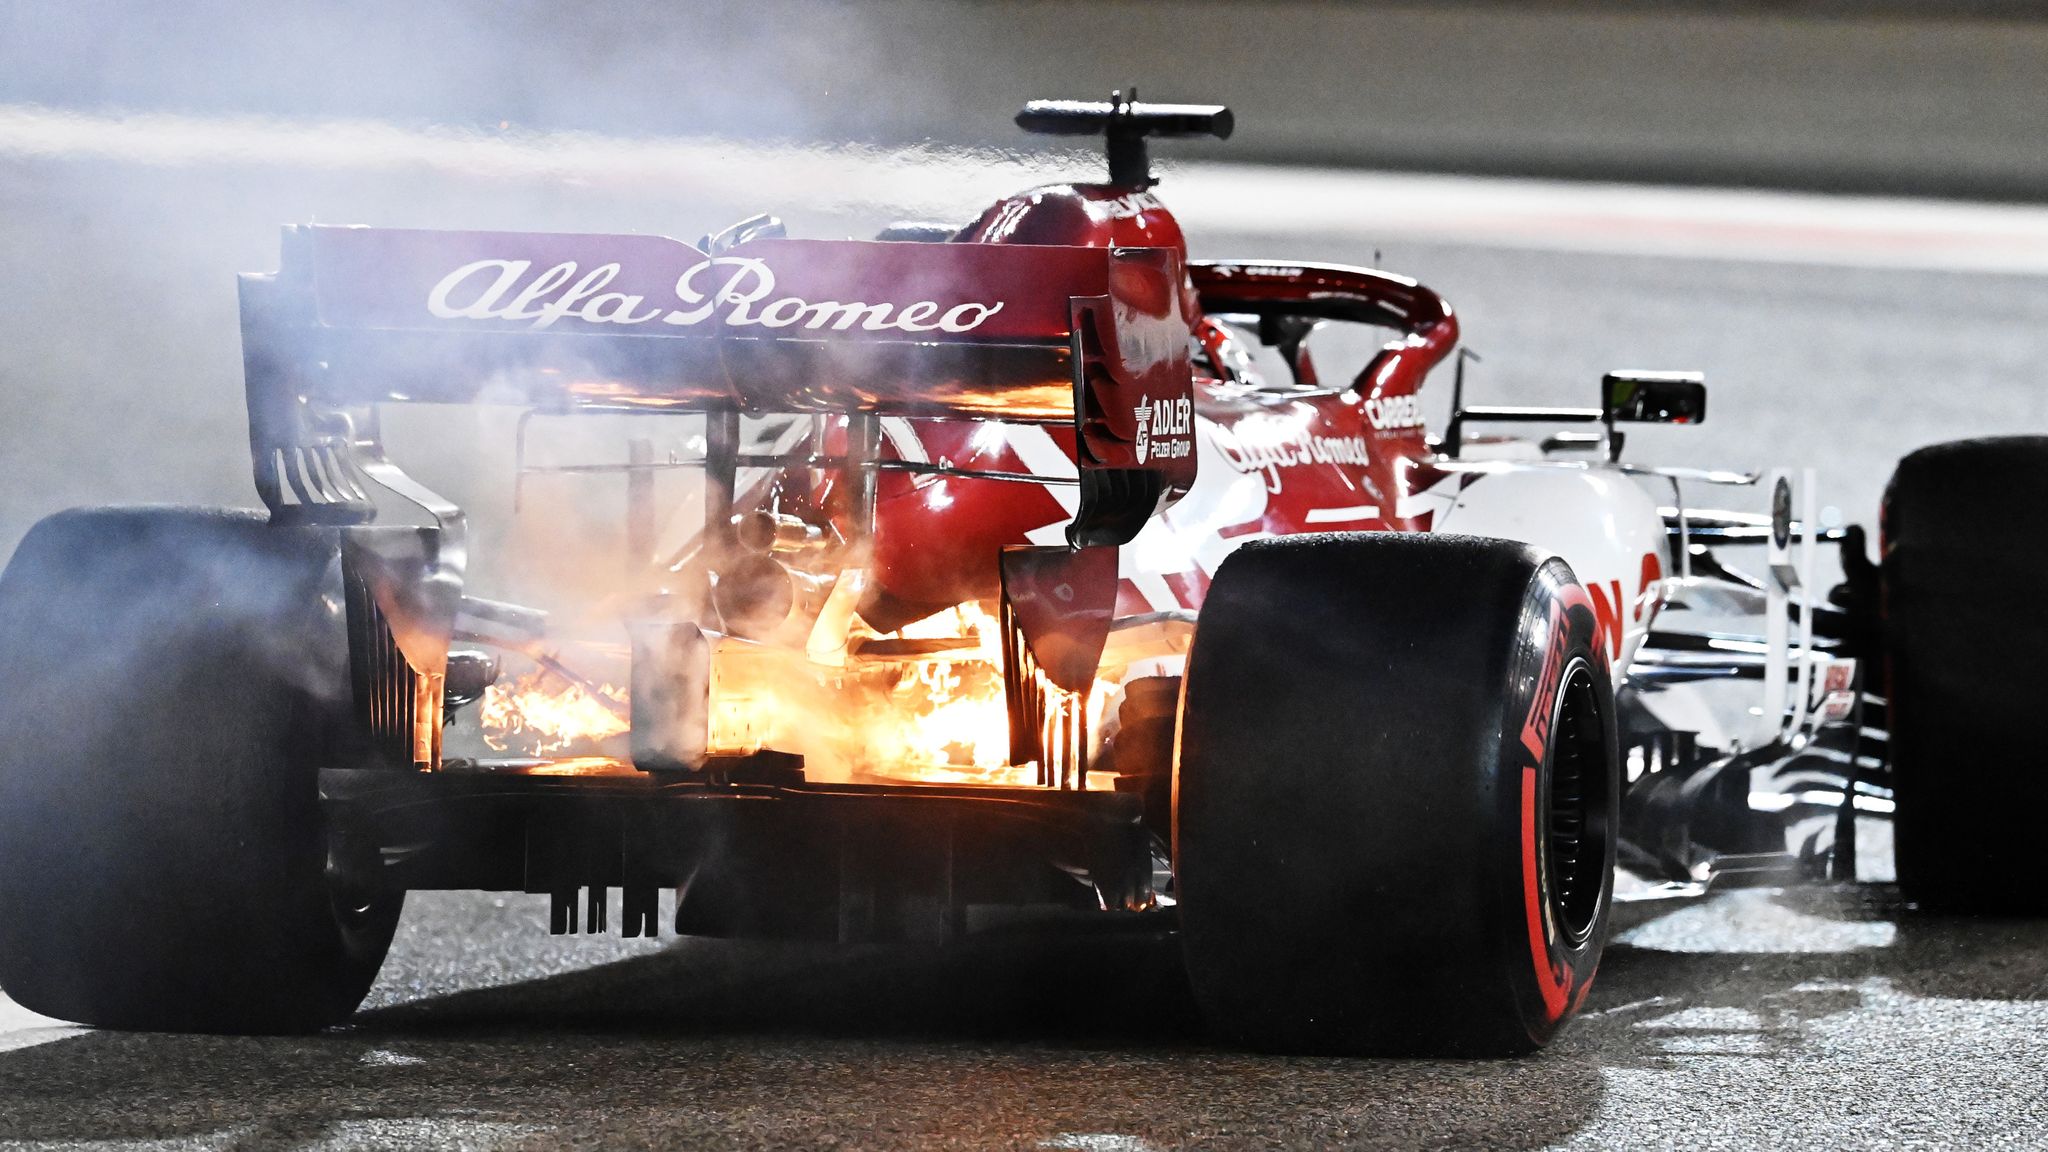 Formula 1 Kimi Raikkonens car catches fire during Abu Dhabi GP practice session World News Sky News